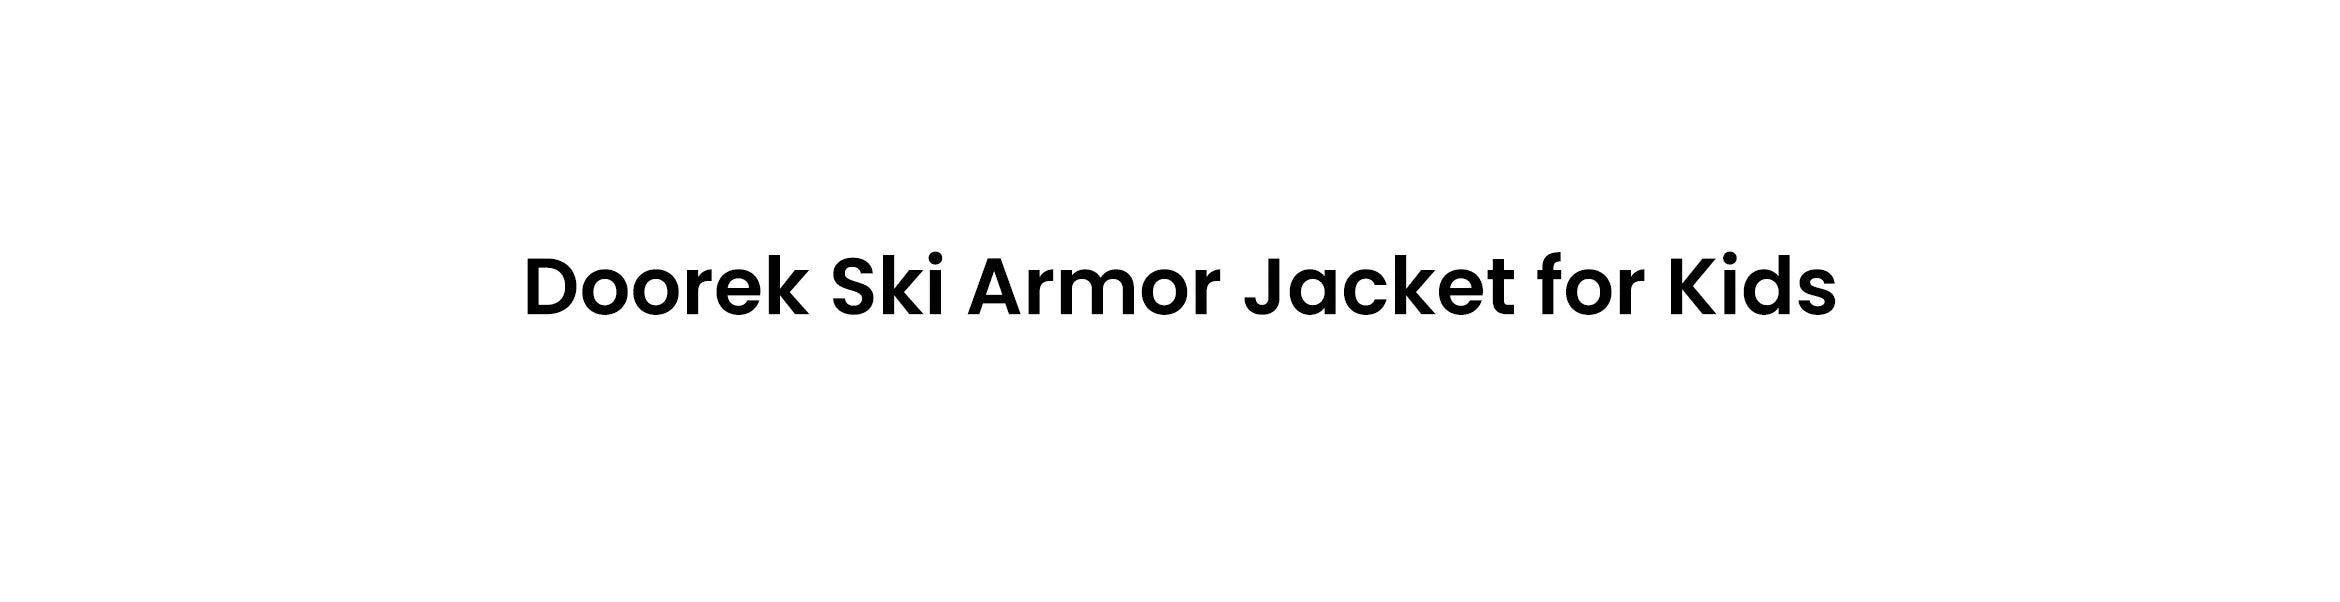 1. Doorek Ski Armor Jacket for Kids